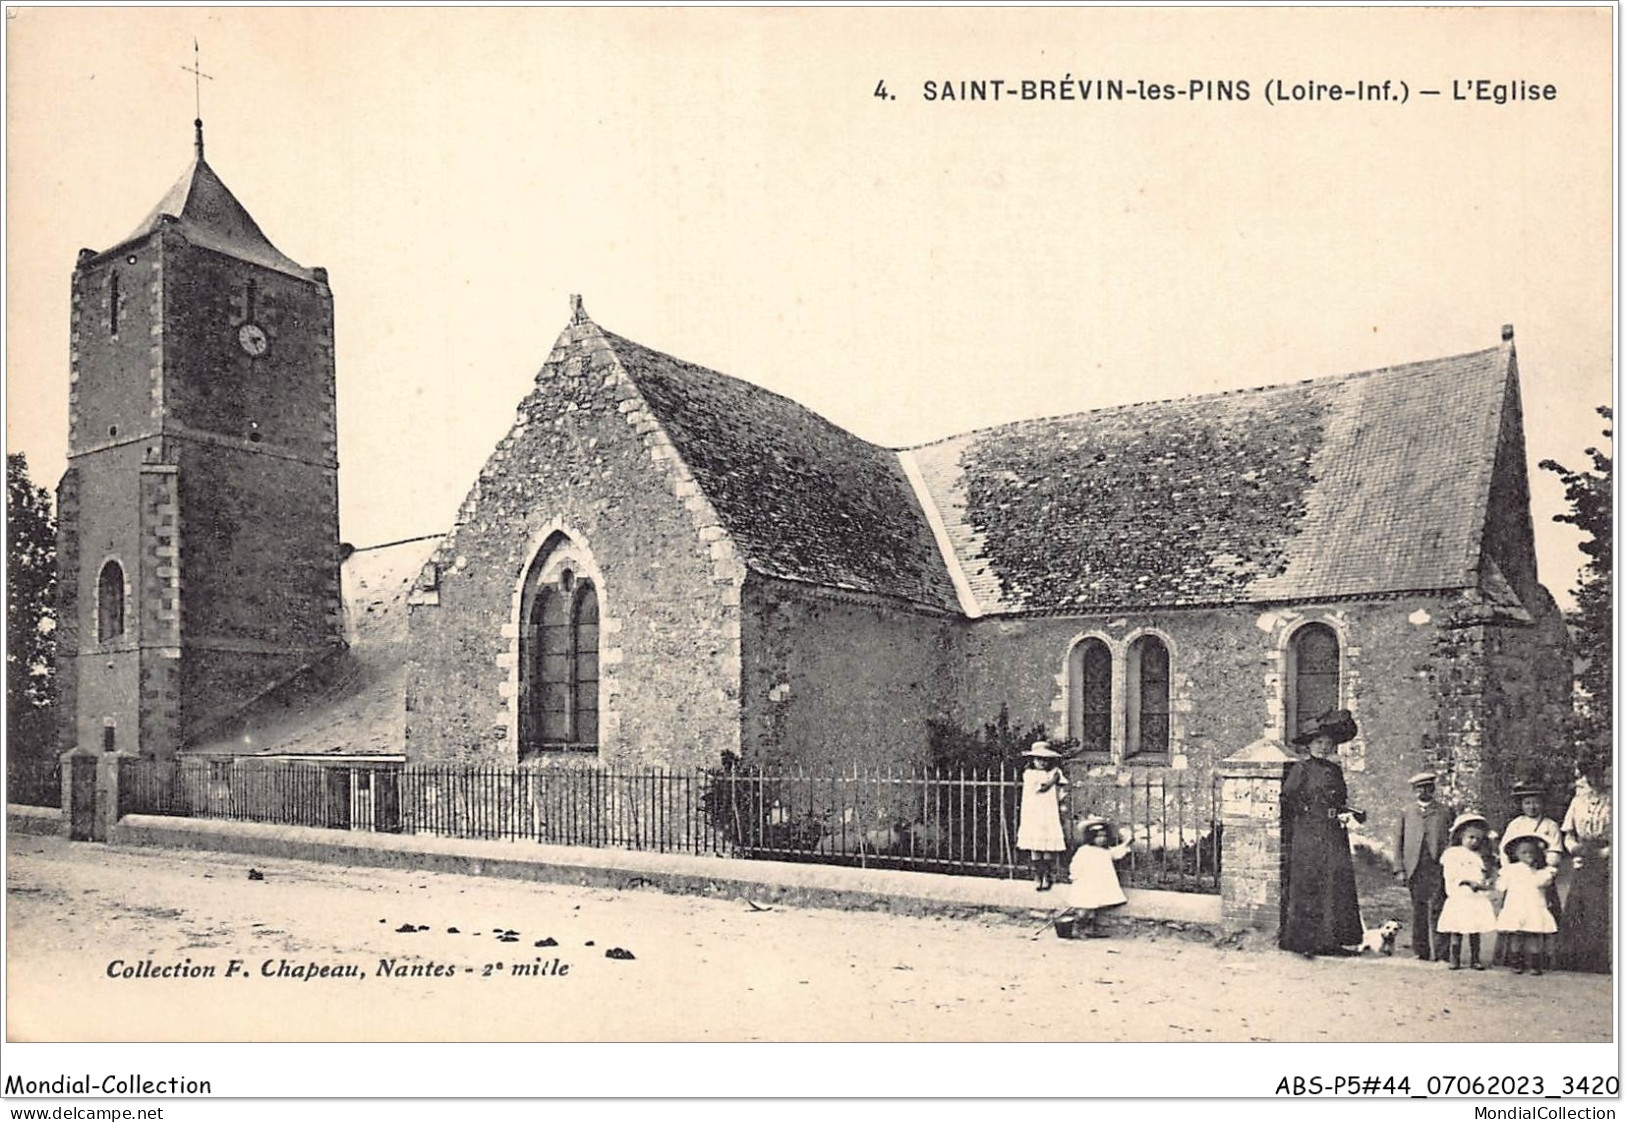 ABSP5-44-0447 - SAINT-BREVIN-LES-PINS - L'Eglise  - Saint-Brevin-les-Pins